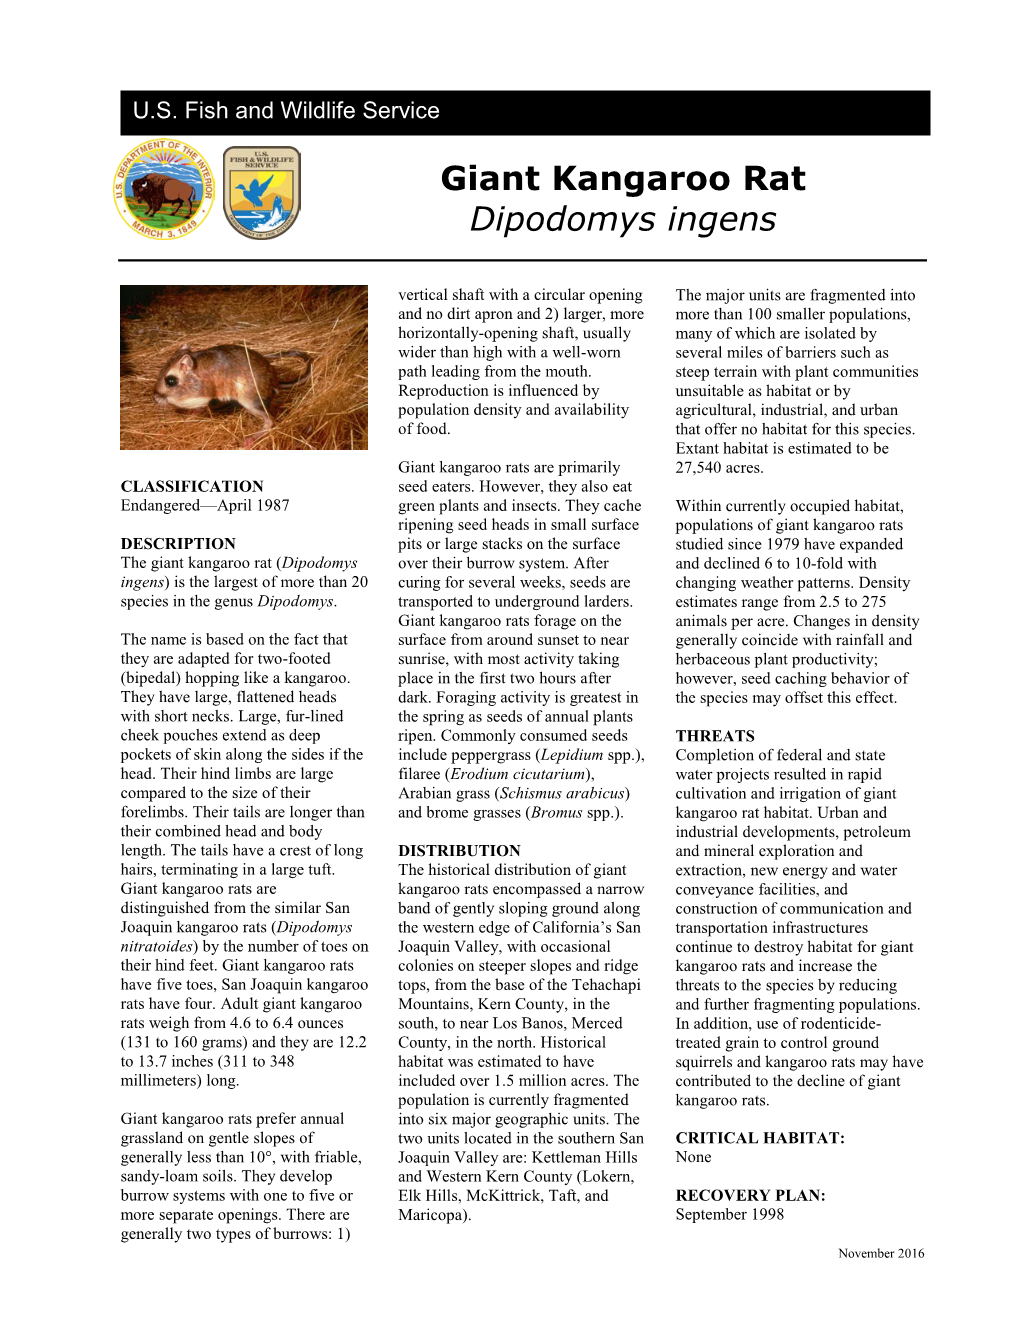 Giant Kangaroo Rat